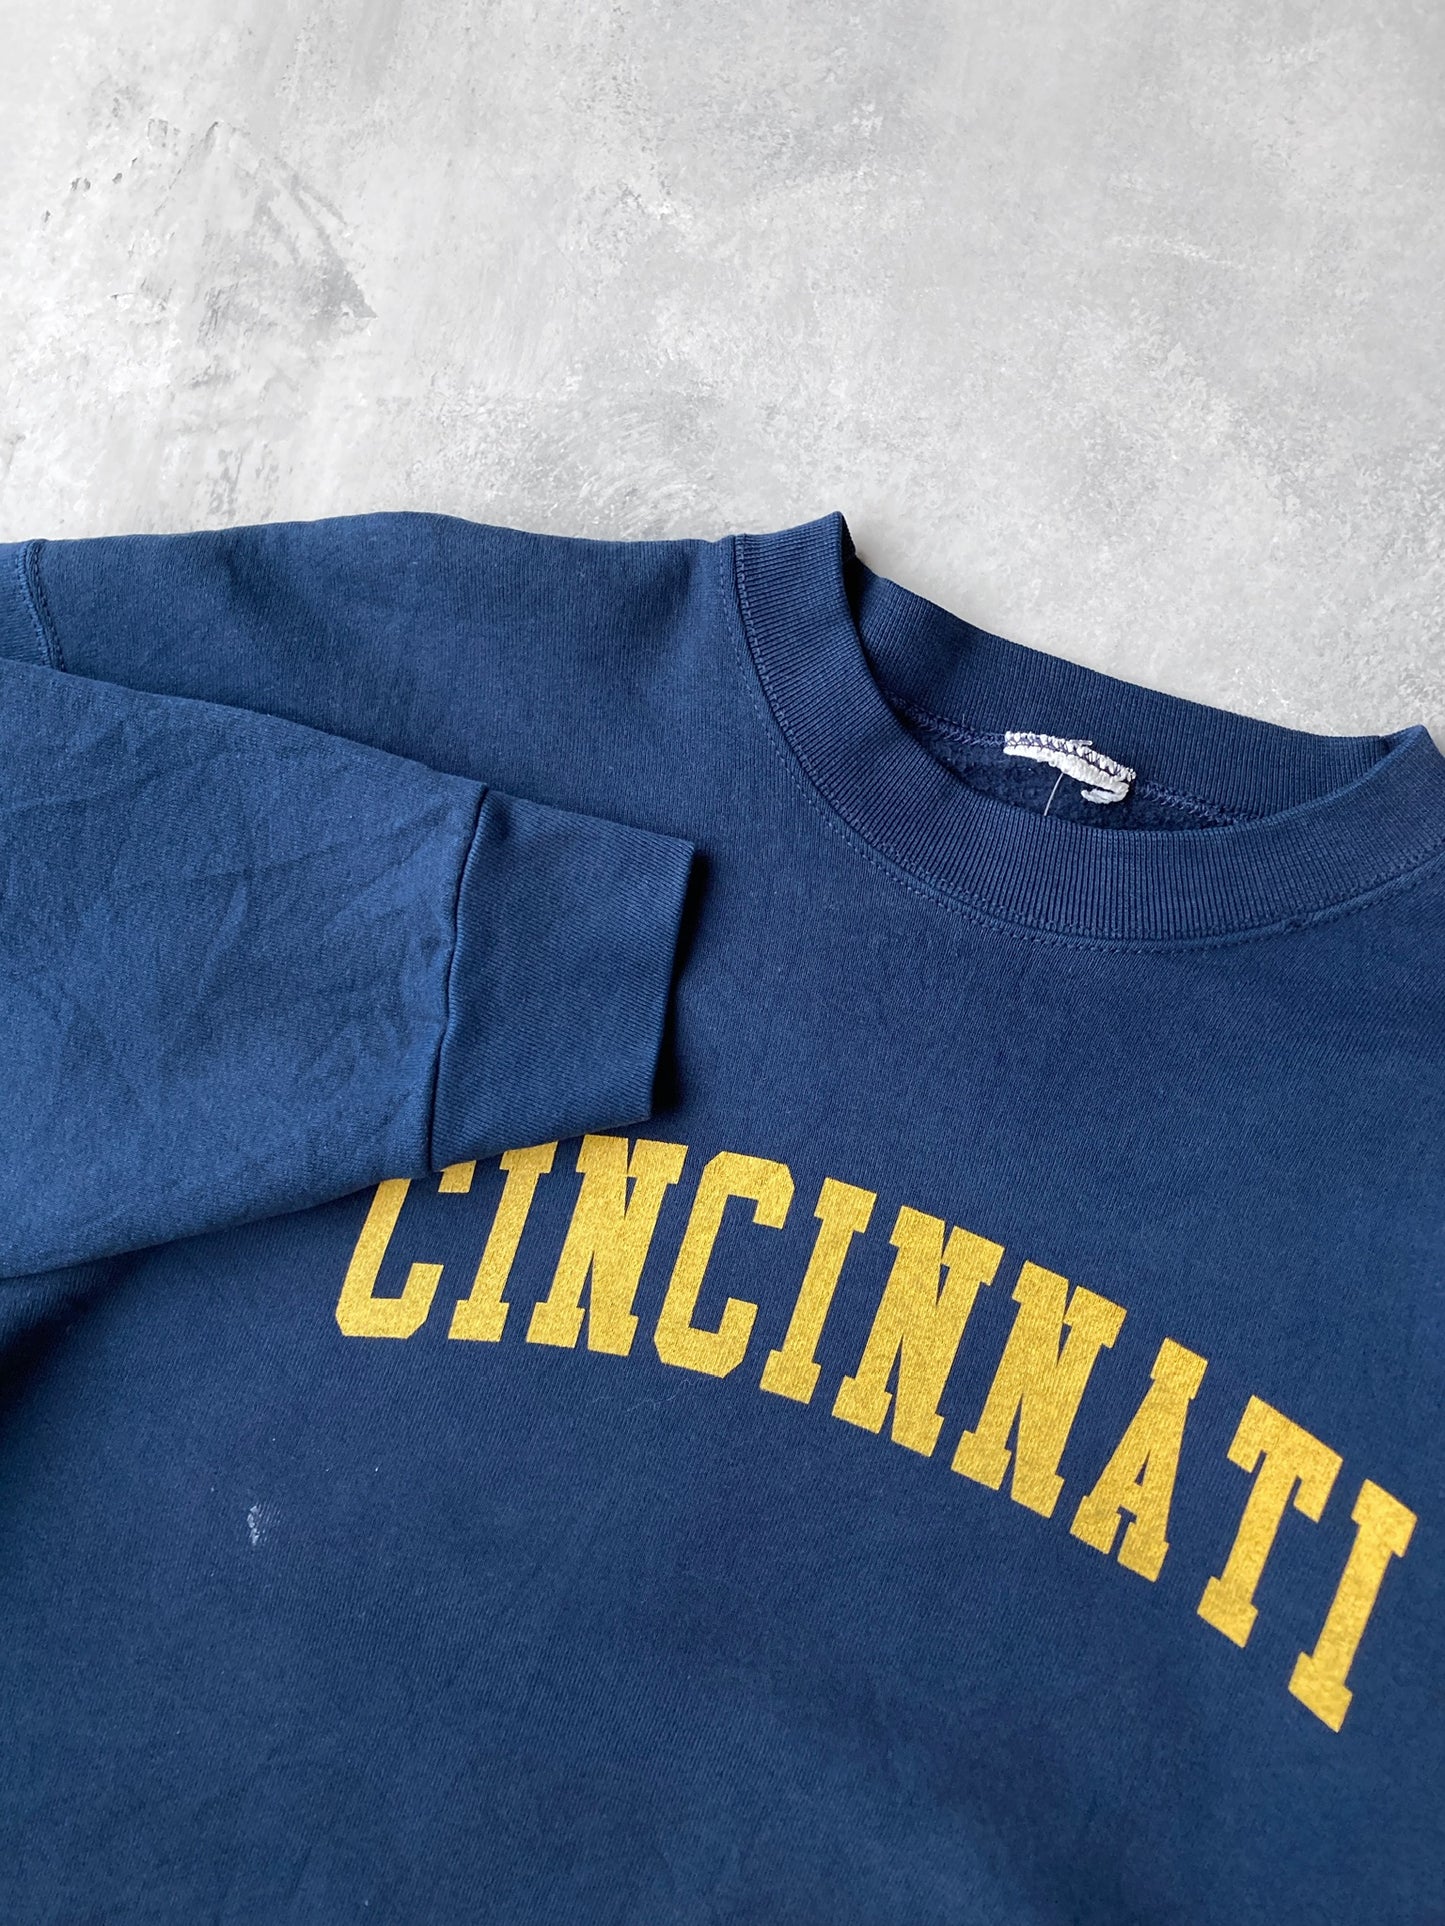 Cincinnati Sweatshirt 90's - XL